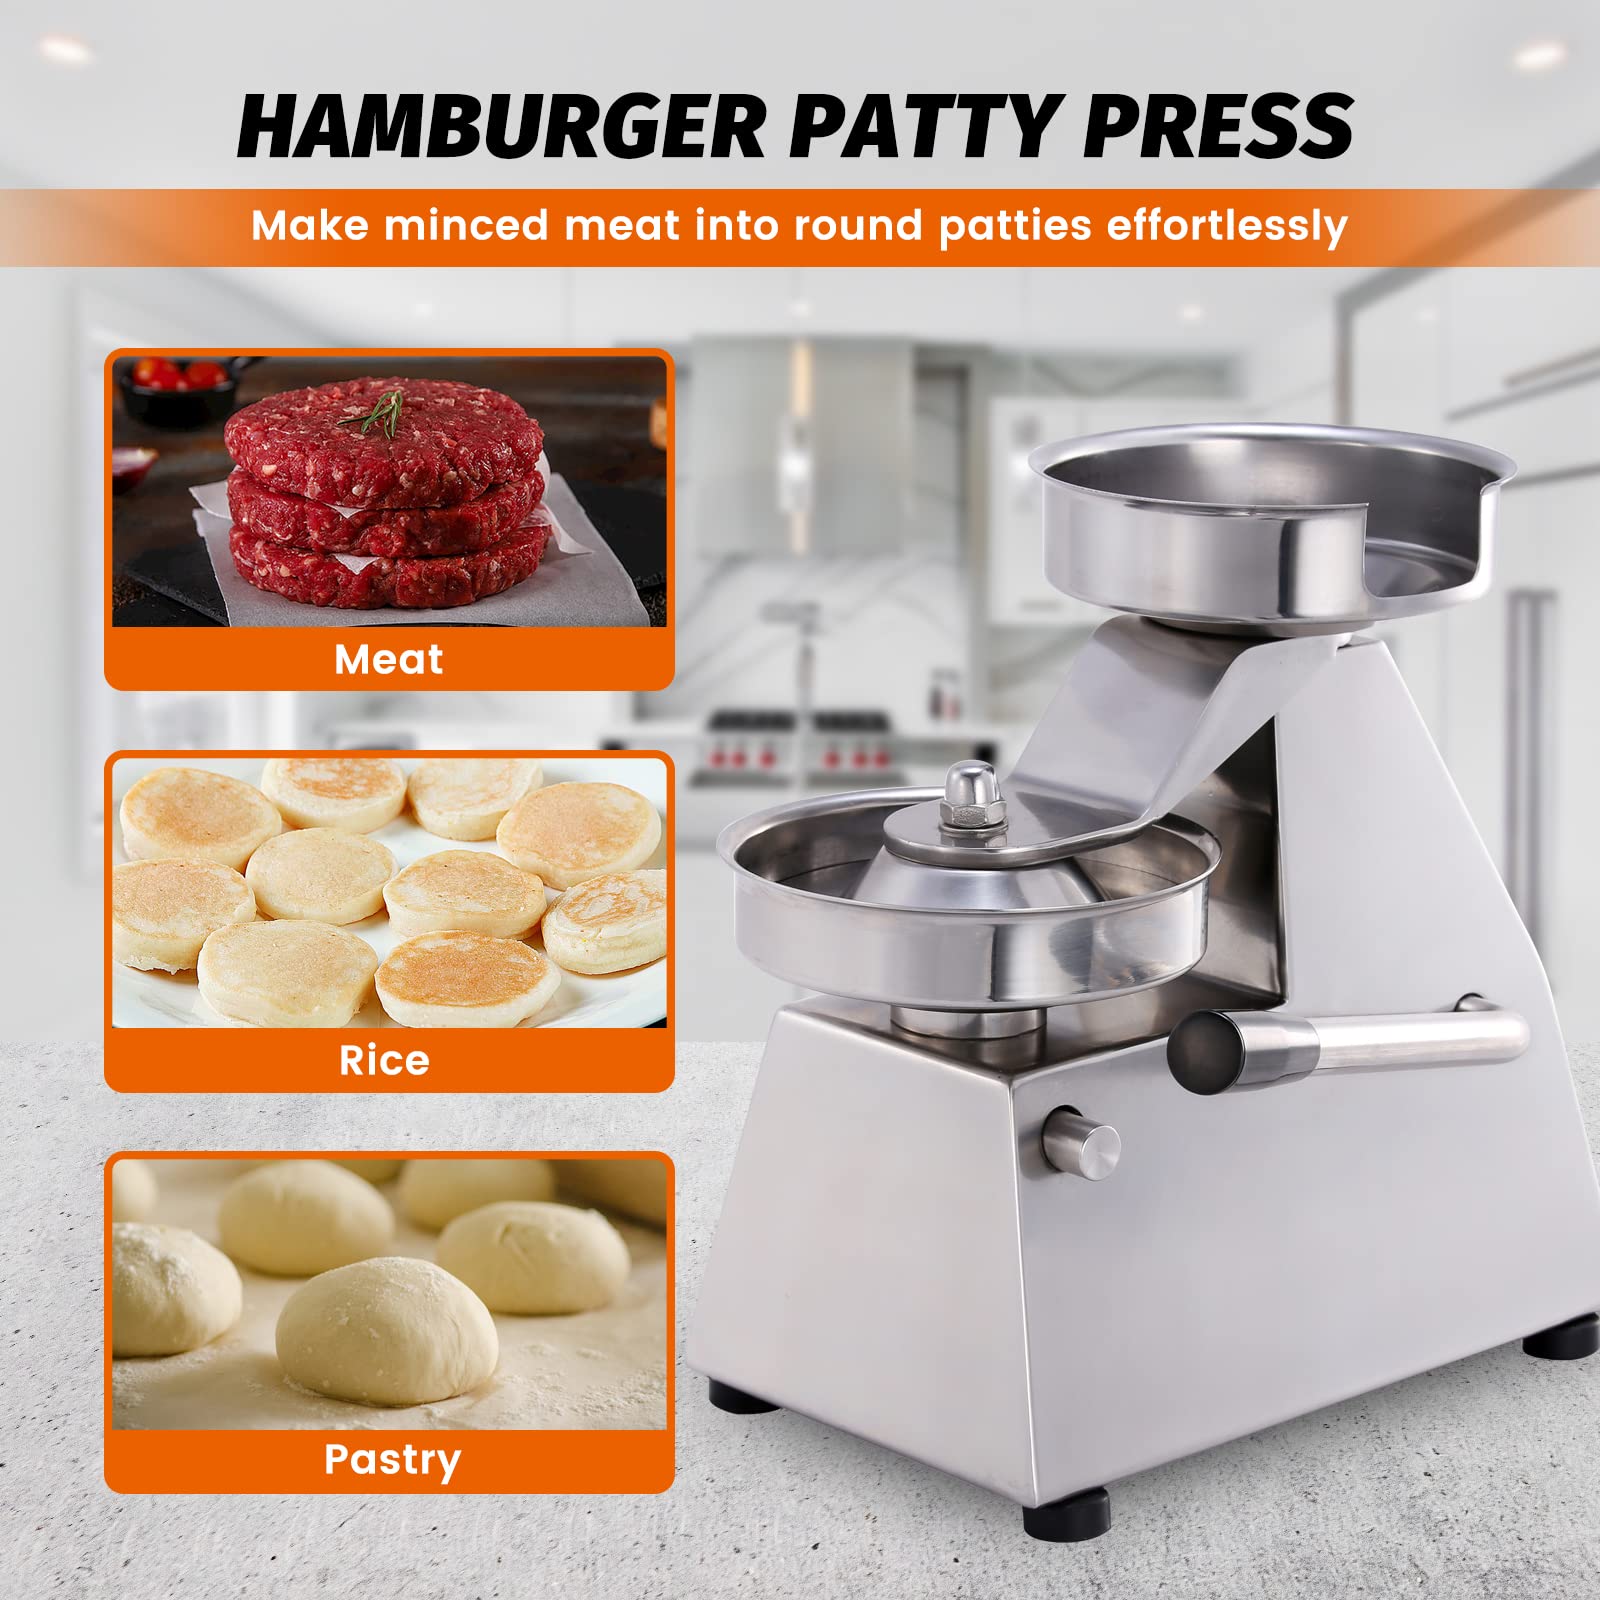 Hakka Commercial Hamburger Press Maker and Burger Press (4" Burger Press)